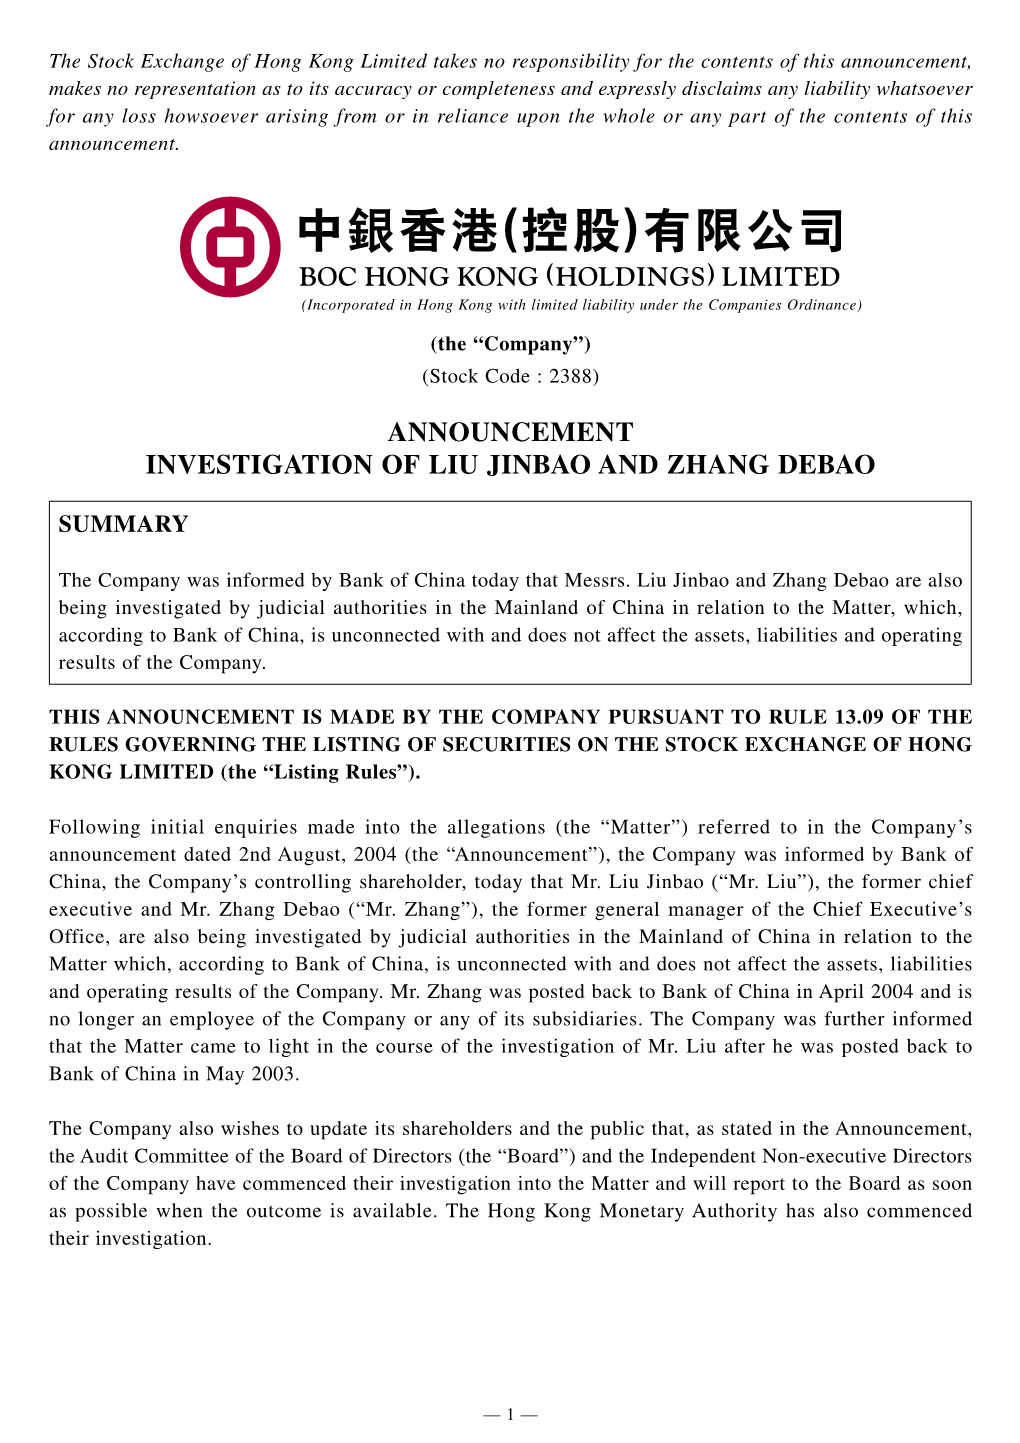 Announcement Investigation of Liu Jinbao and Zhang Debao